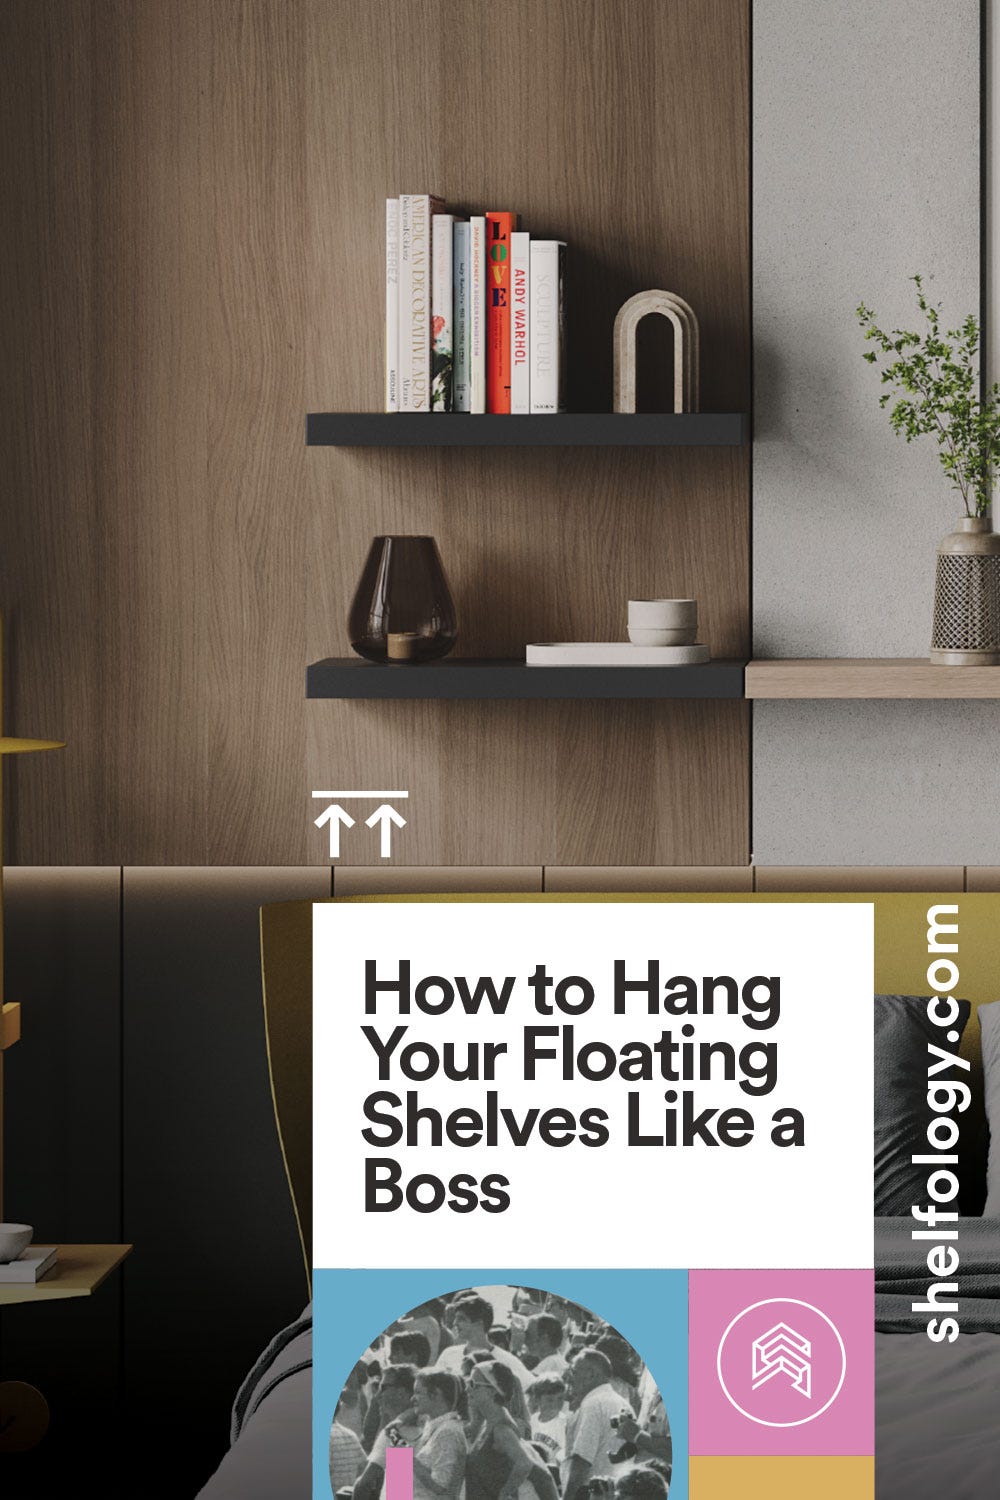 Floating Shelves 101: How to Hang Your Floating Shelf Like a Boss